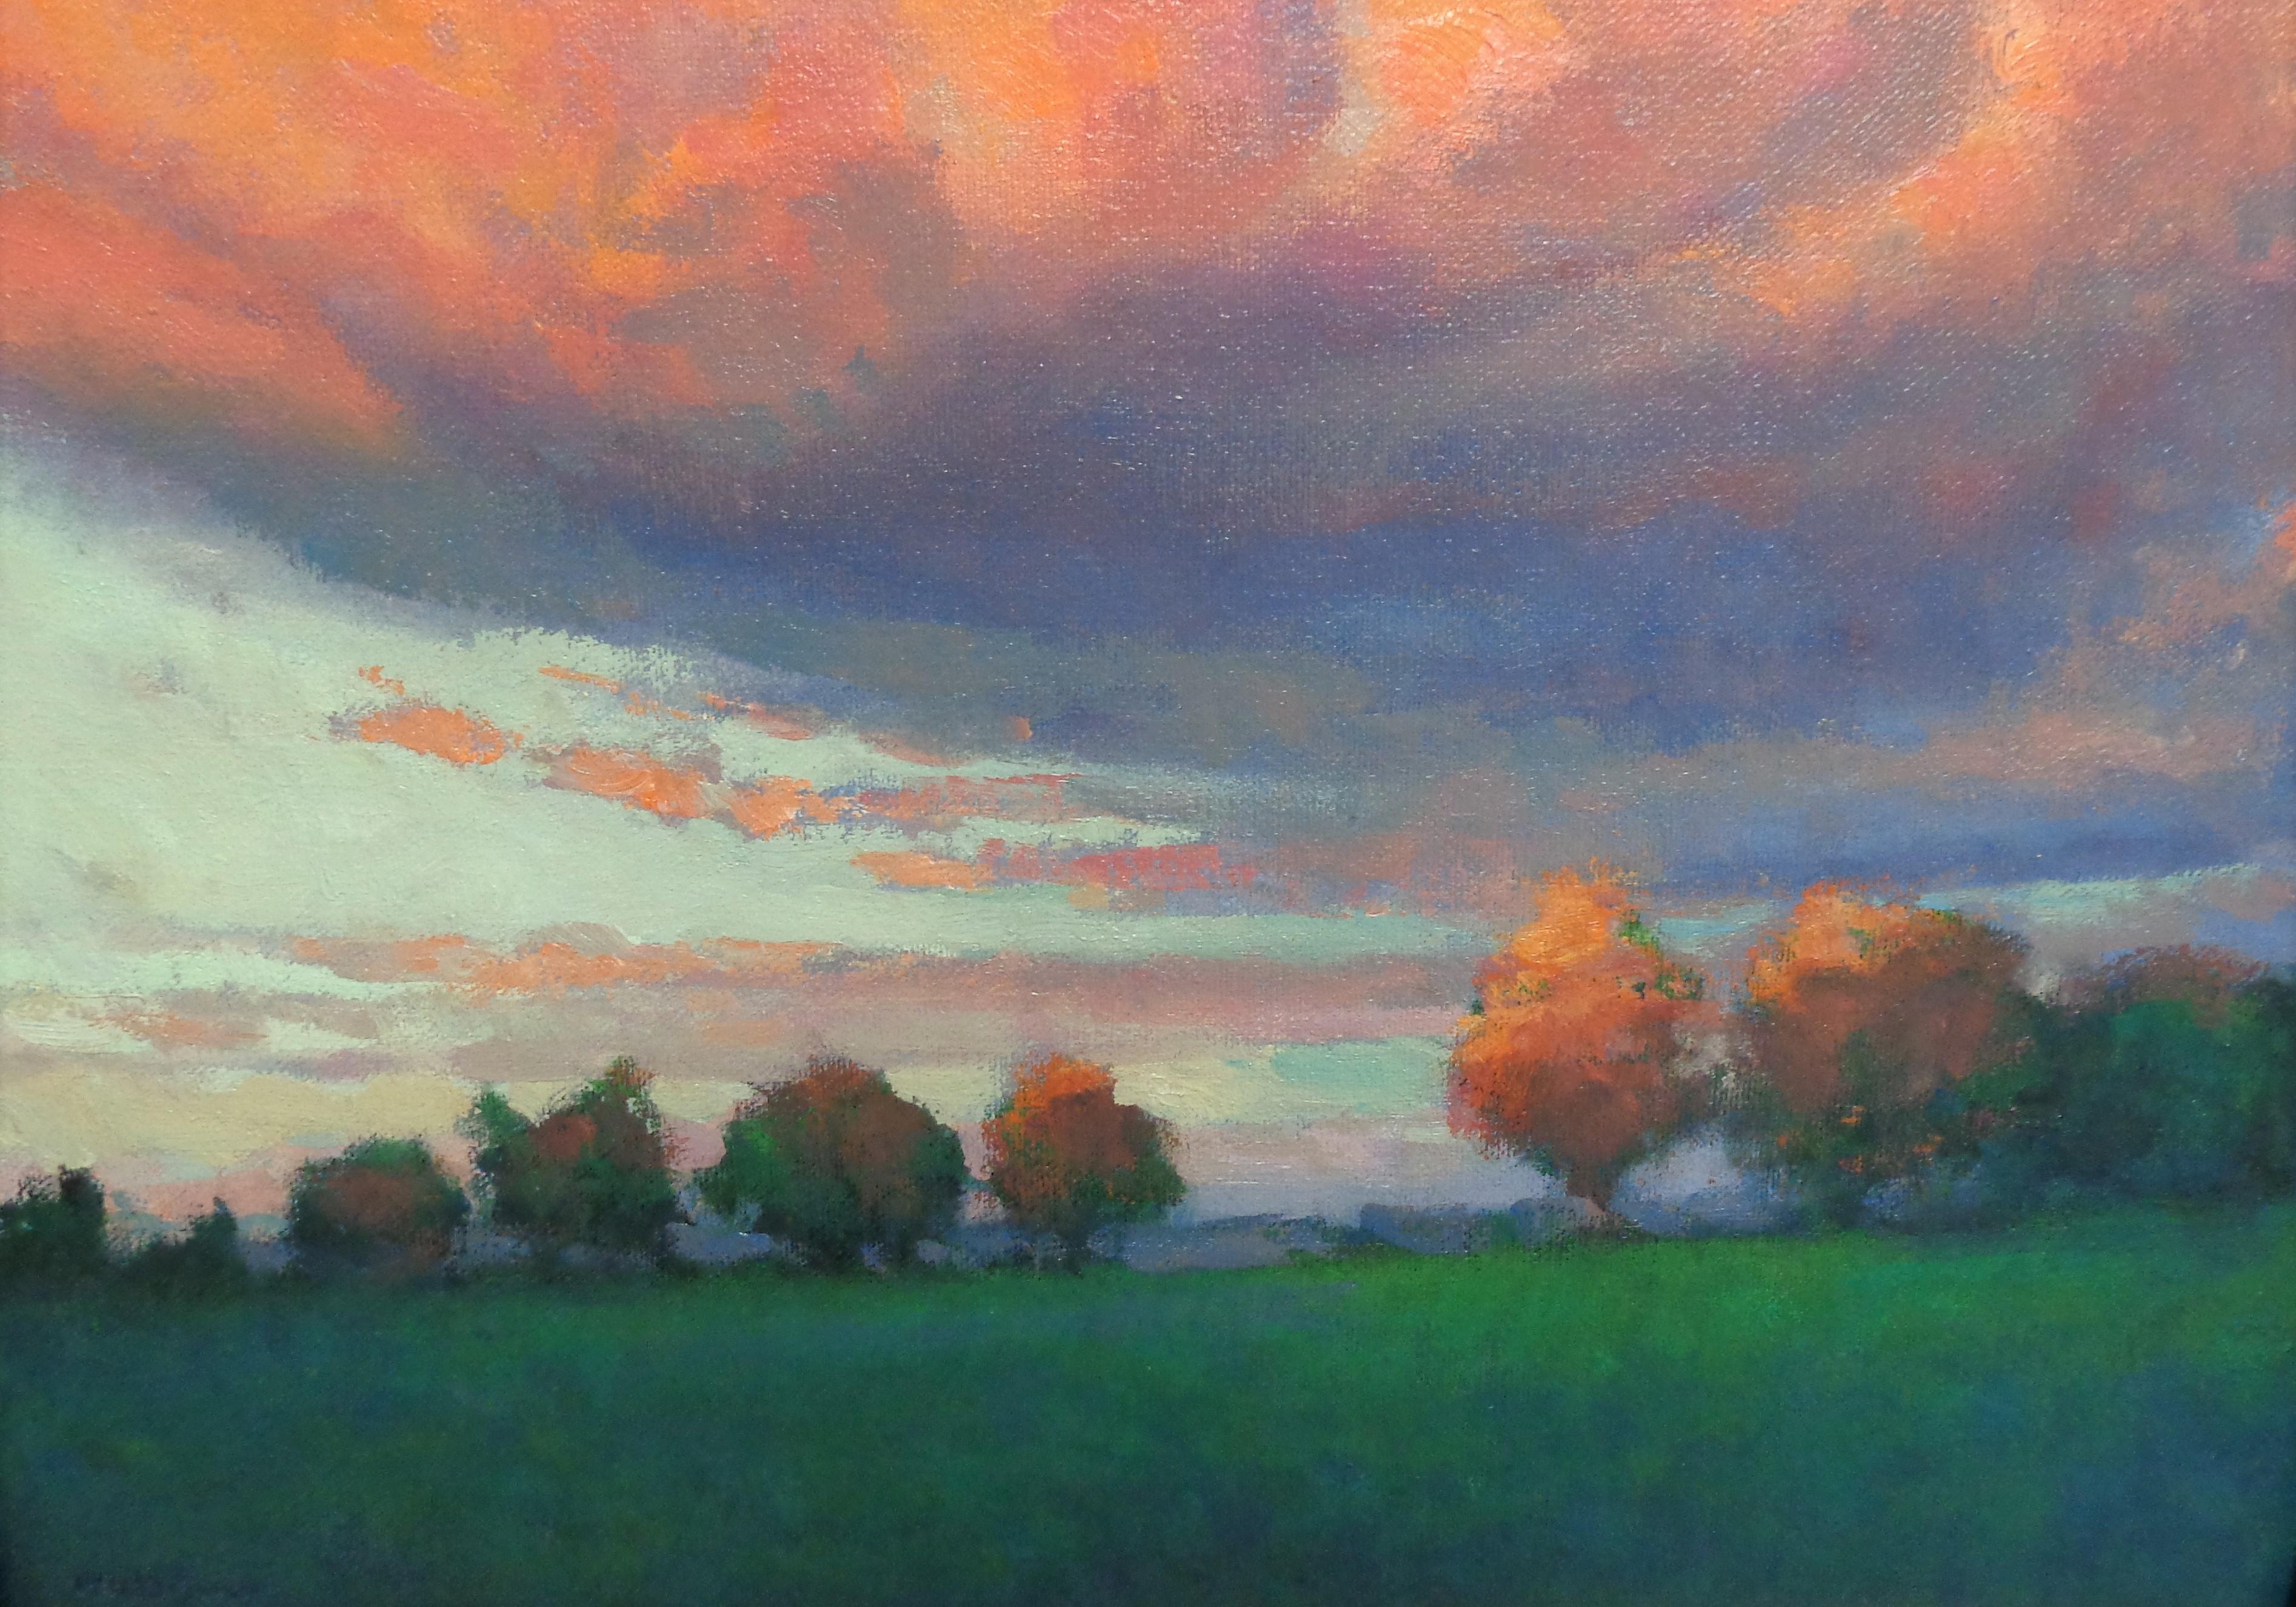  Impressionistic Rural Landscape Oil Painting Michael Budden Sunset Inspiration For Sale 4